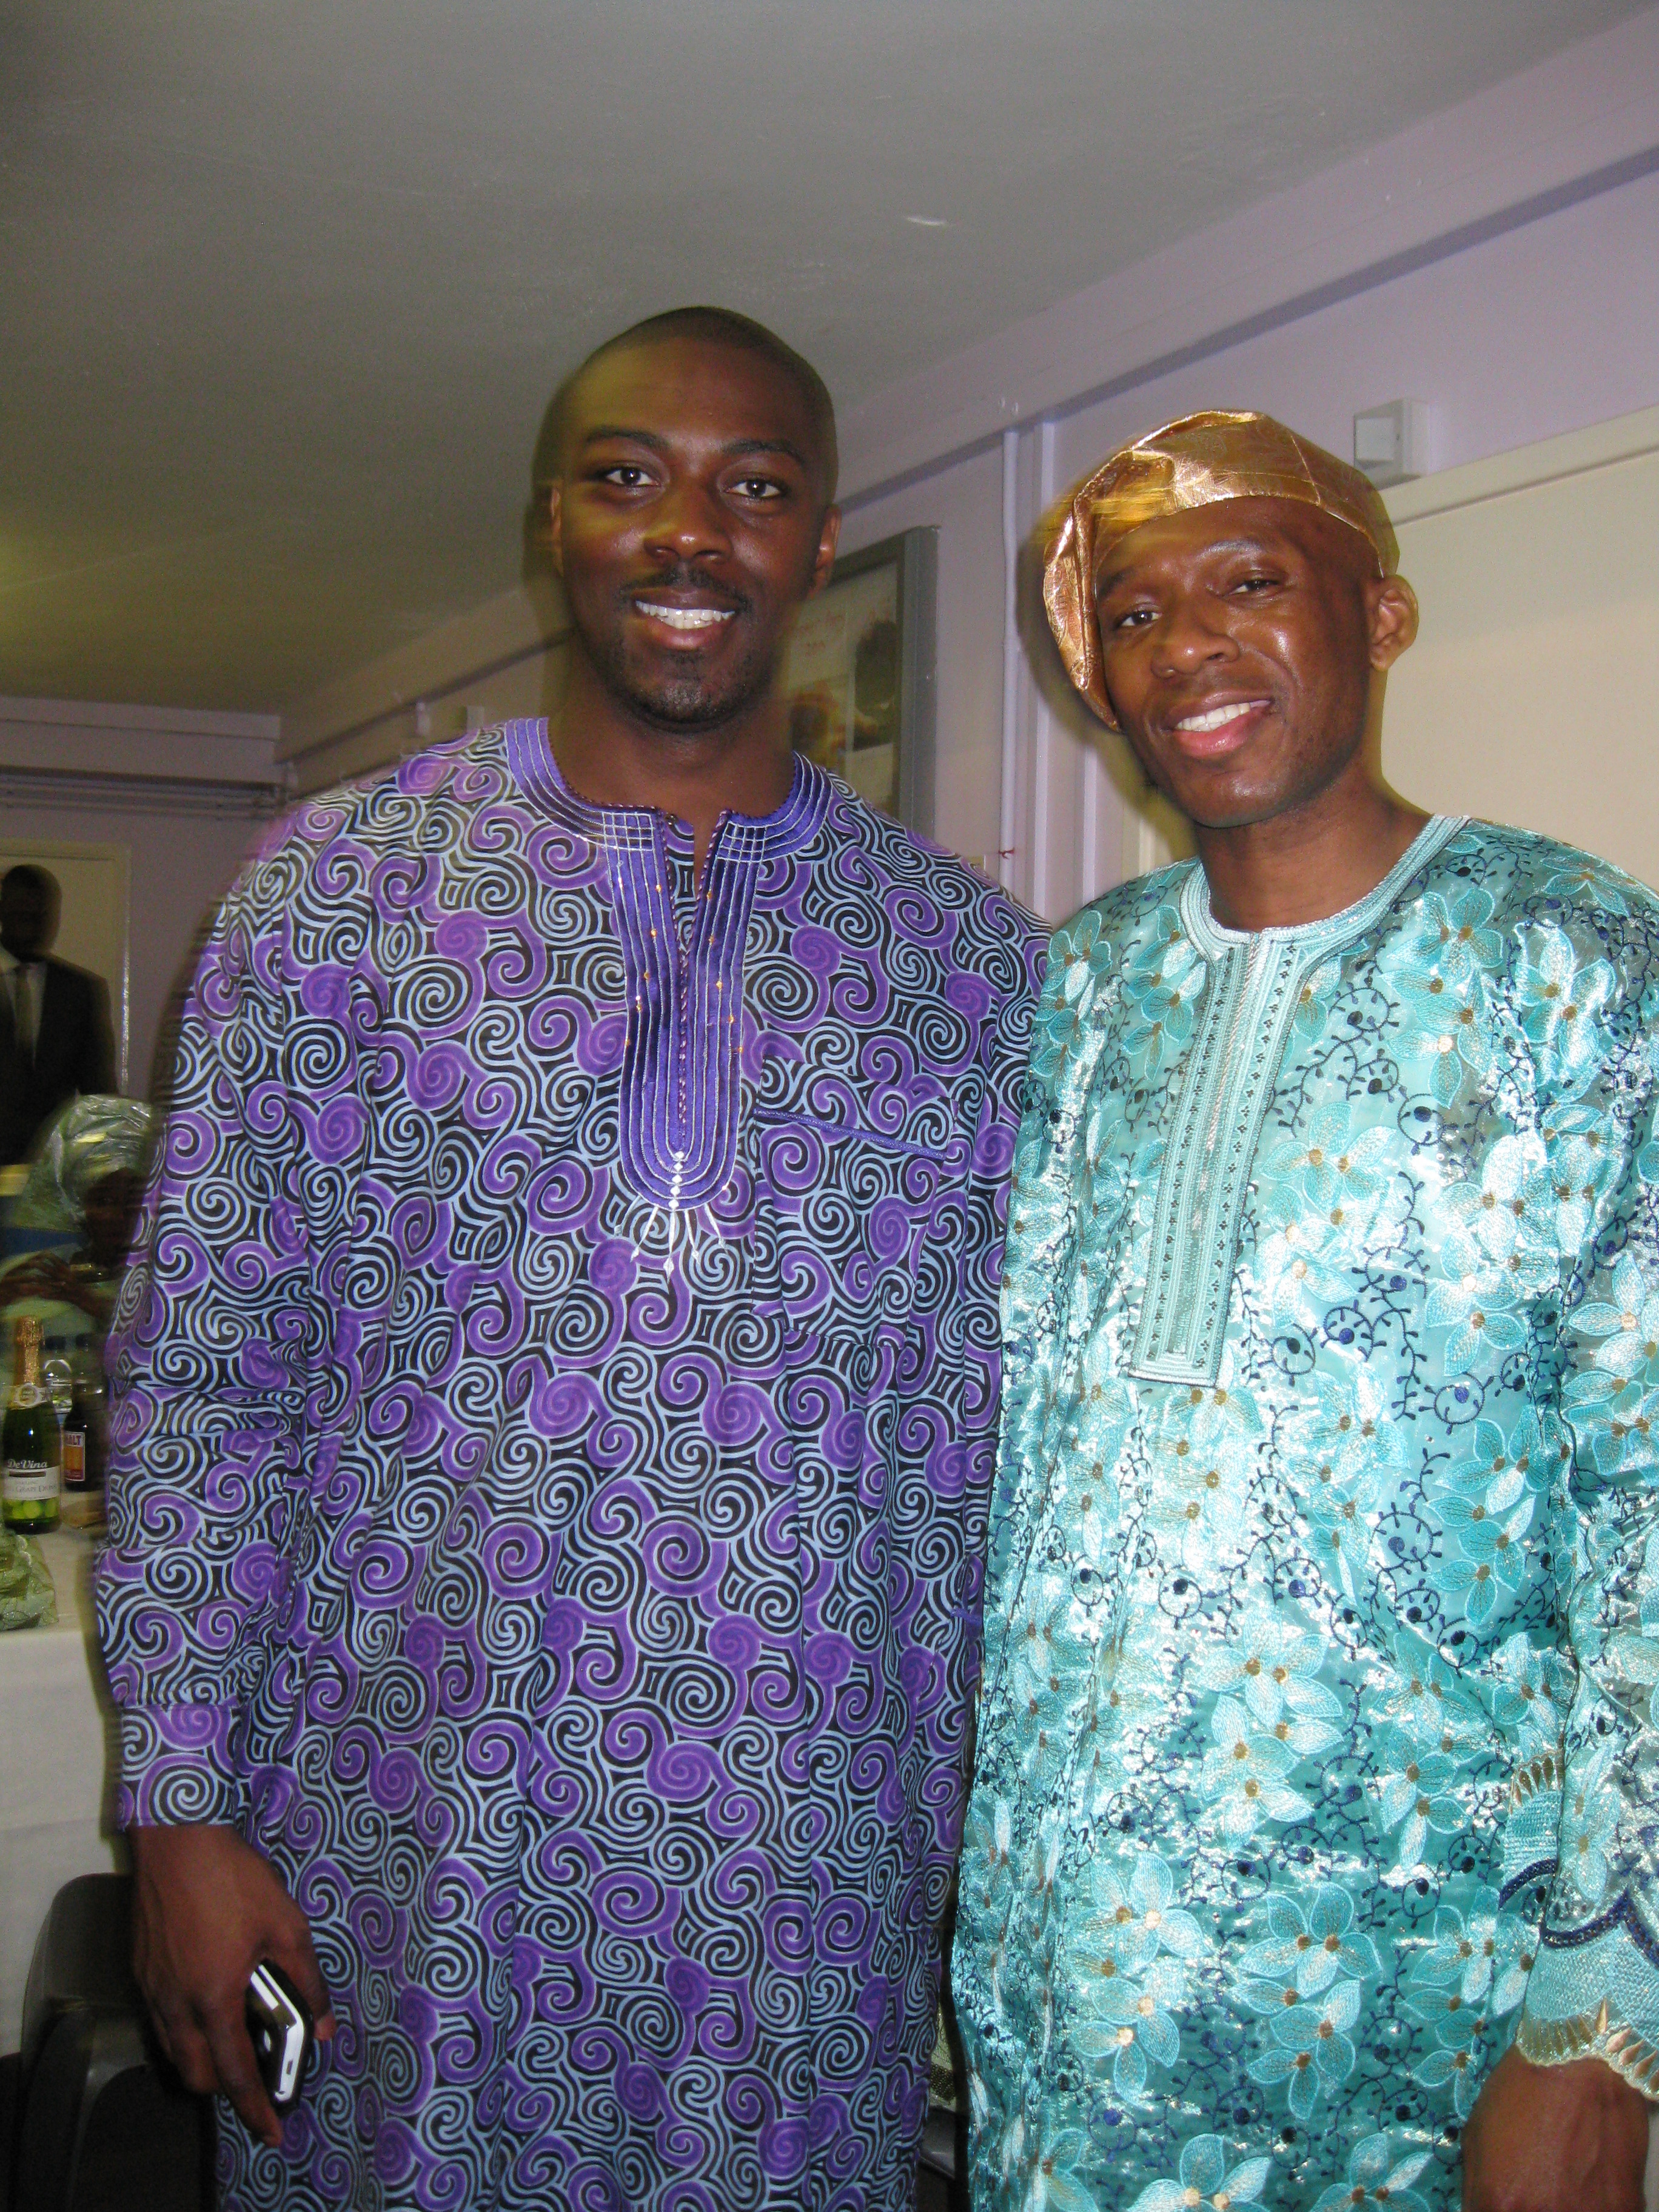 David Olawale Ayinde, Actor with Fellow Actor and Famiy Friend David Ajala